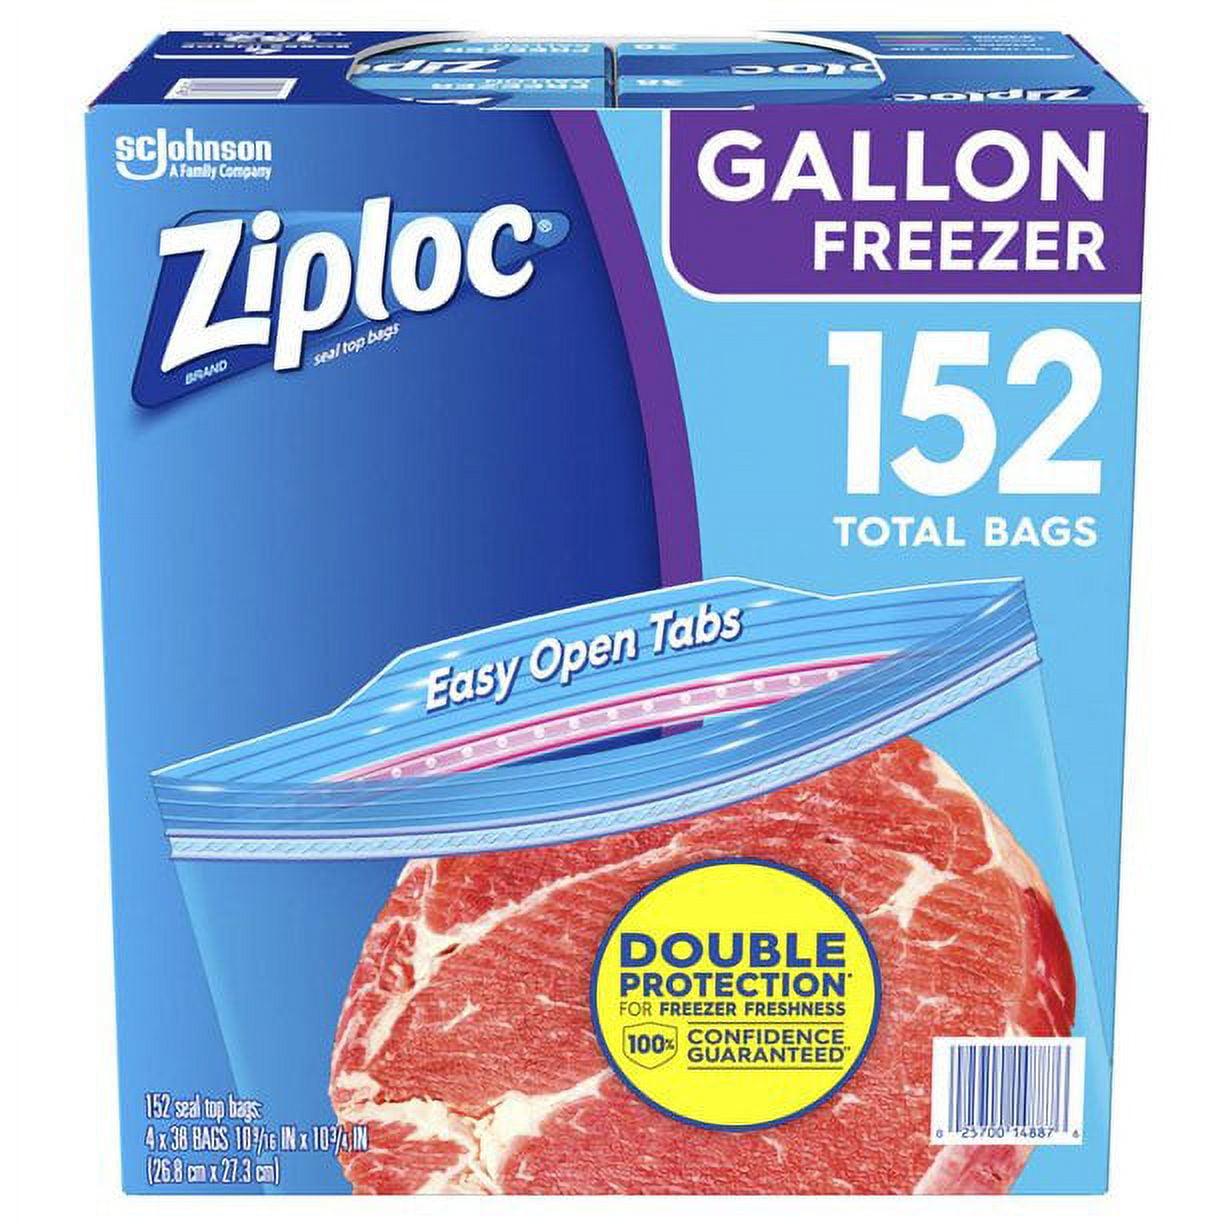 Ziploc 1/2 gallon Freezer Bags, 144 Count (Pack of 36), Original Version